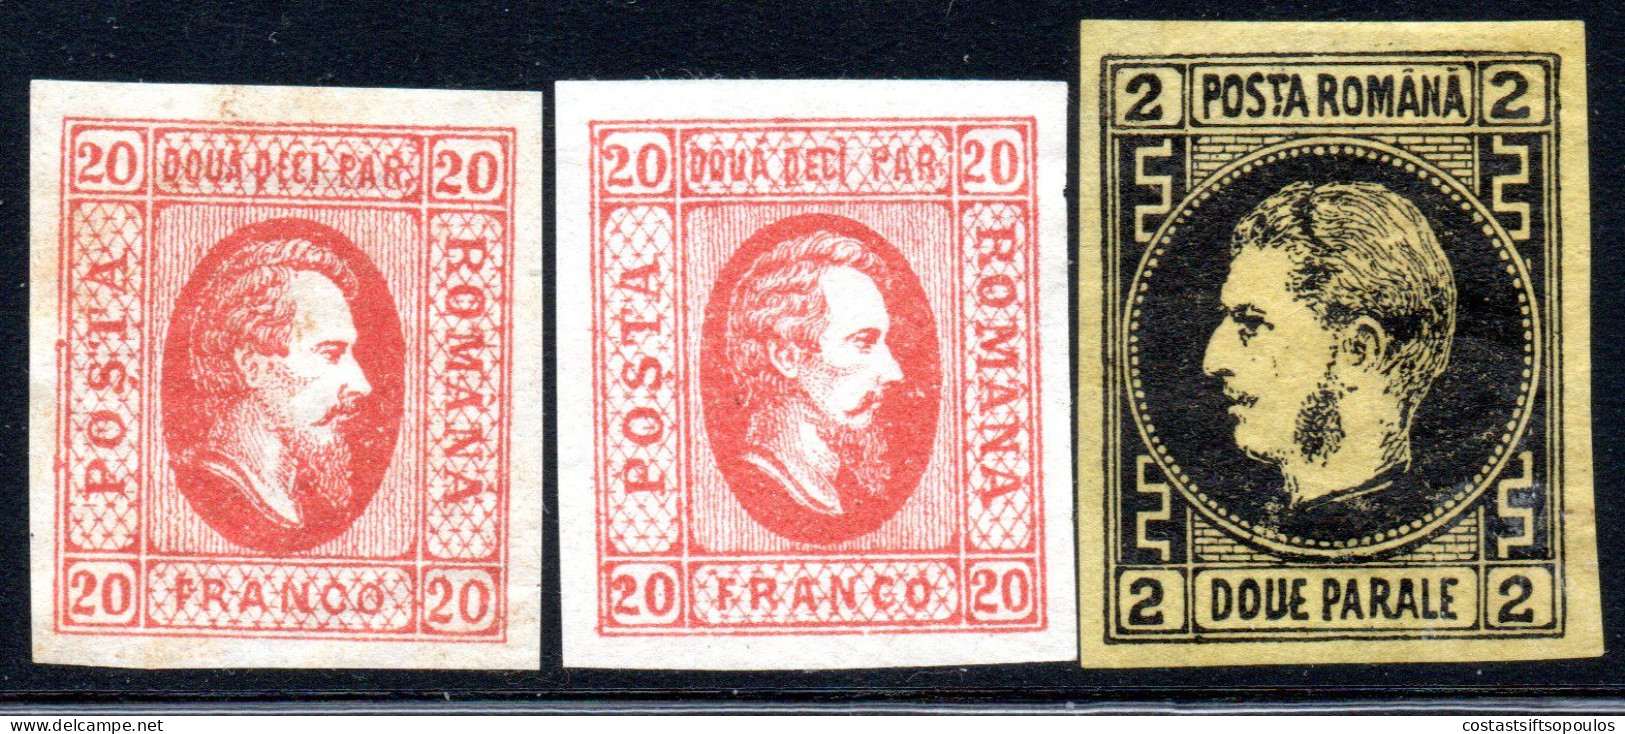 3228.1865 20p. BOTH TYPES WITHOUT GUM,1866 2p. MH - 1858-1880 Moldavië & Prinsdom